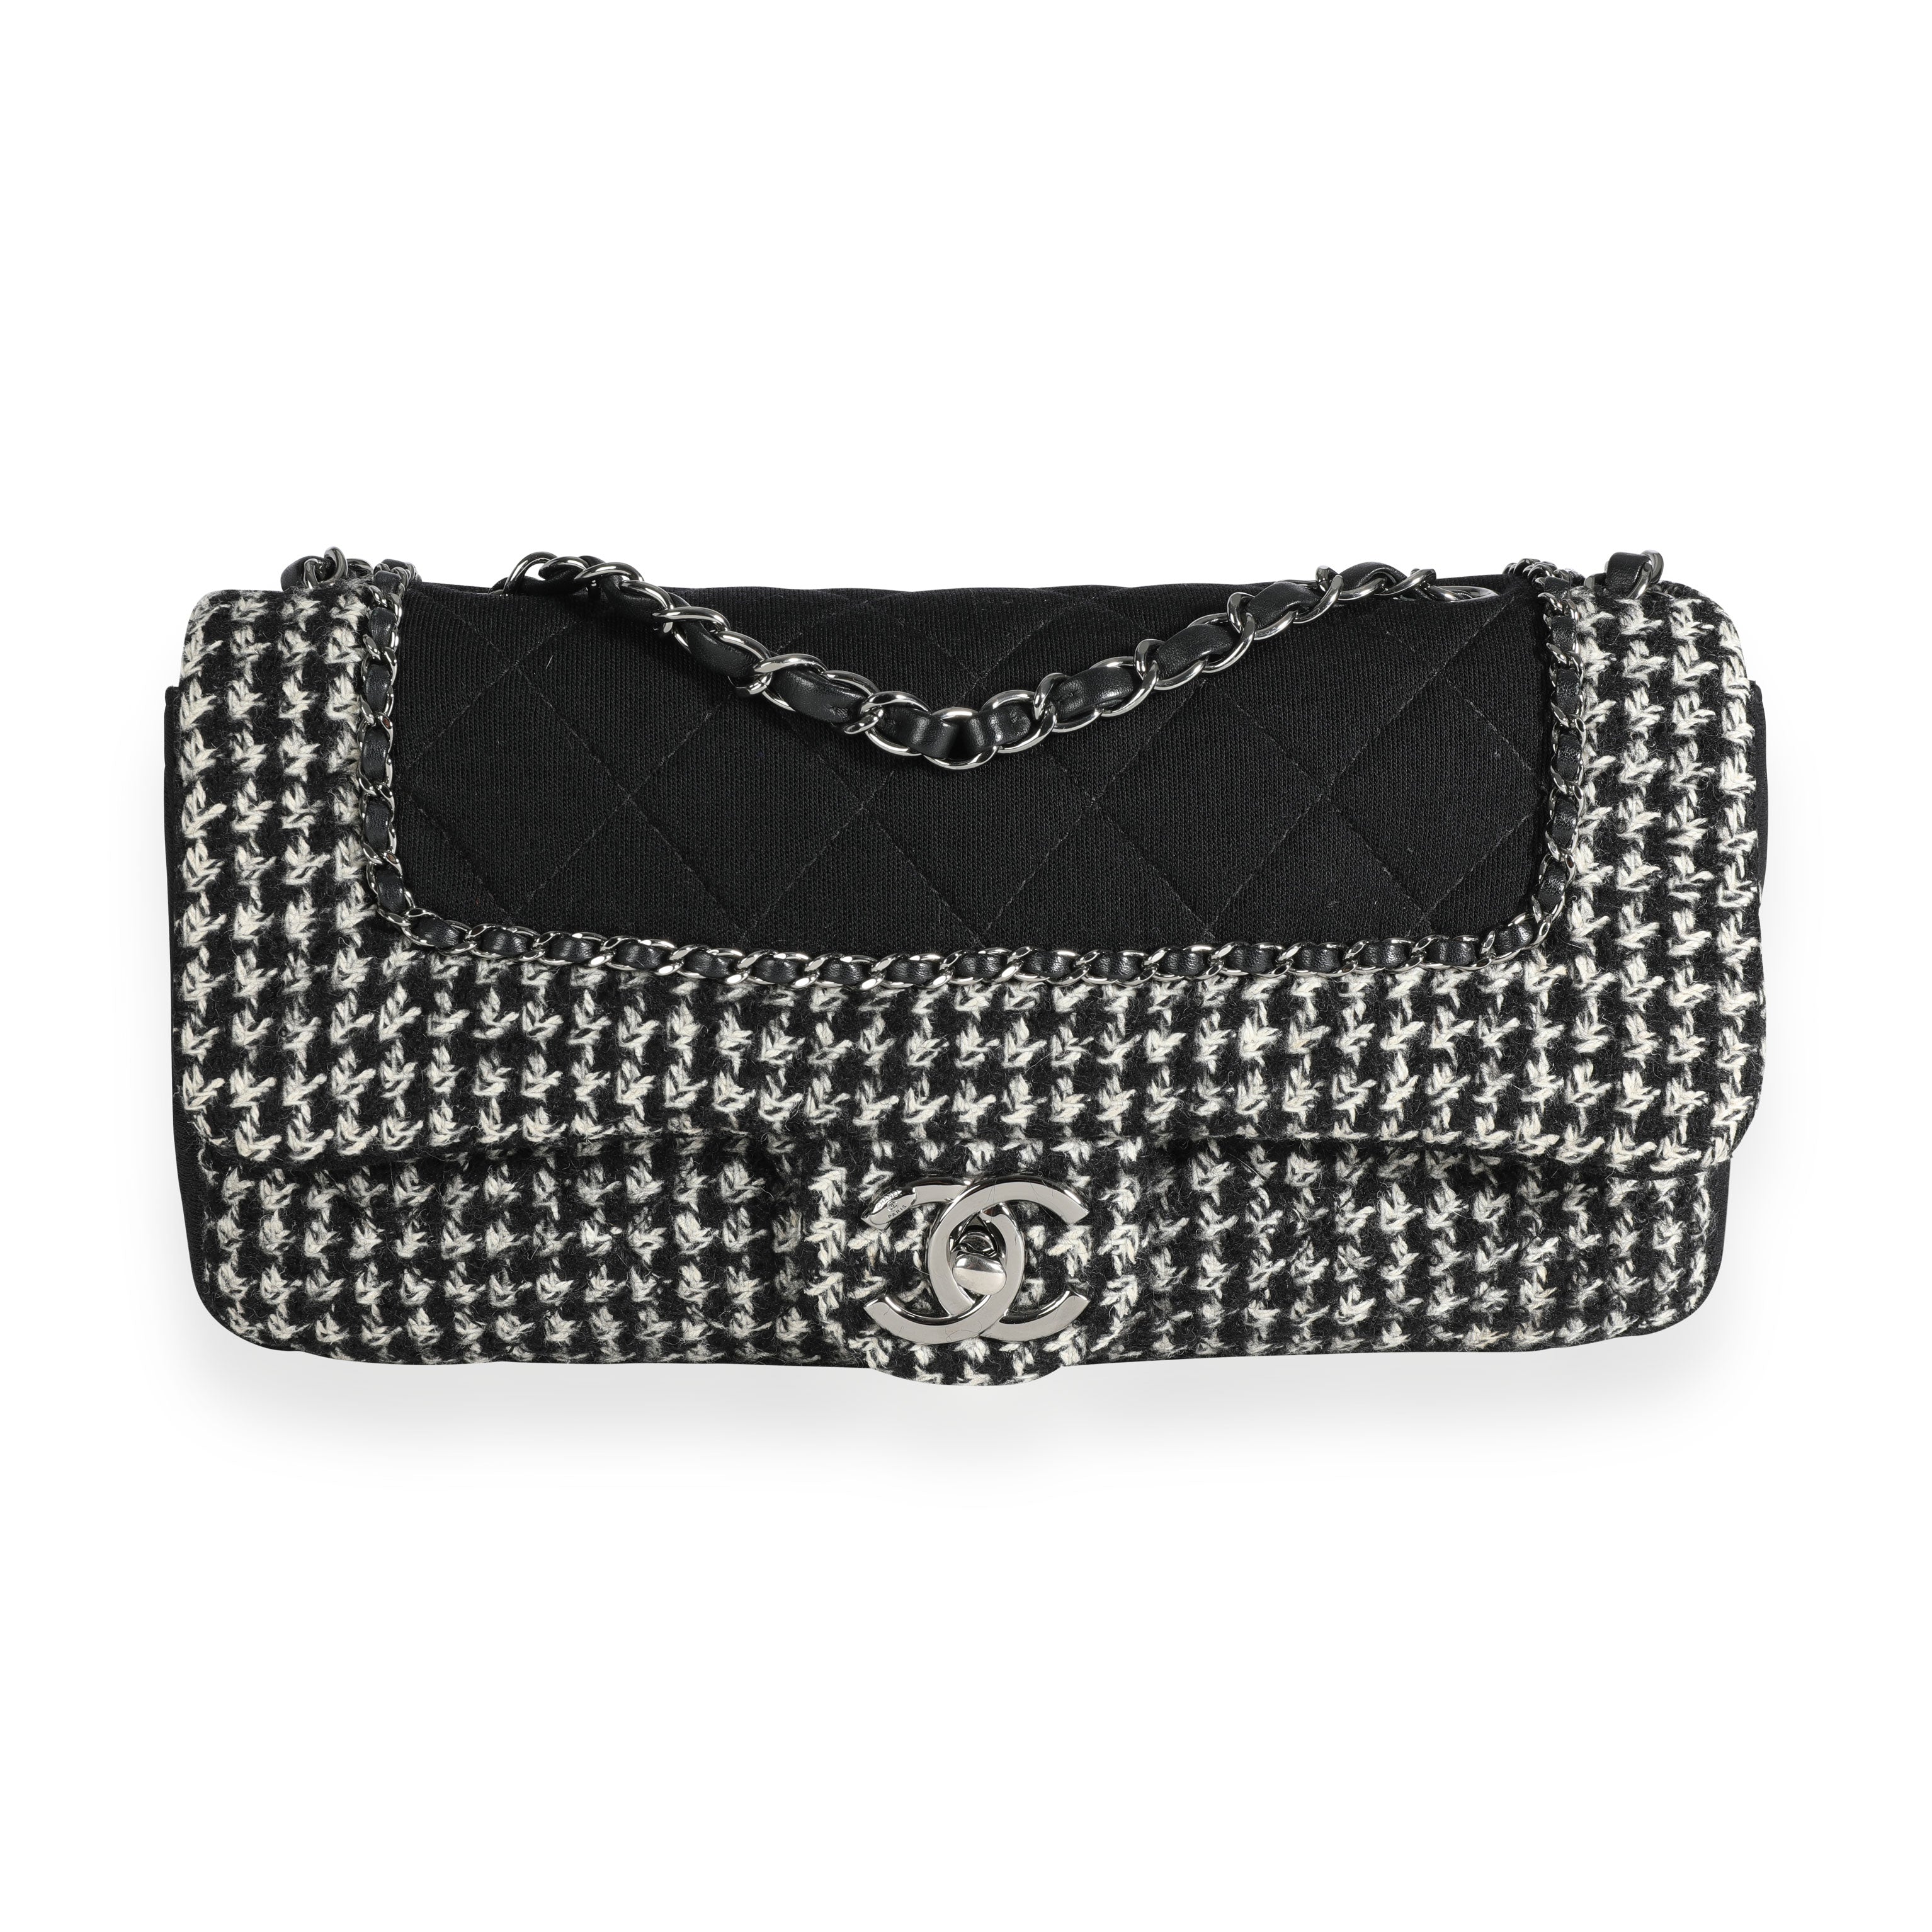 Chanel 2.55 Handbag 391796, Silver Suhali Leather Lockit PM Bag